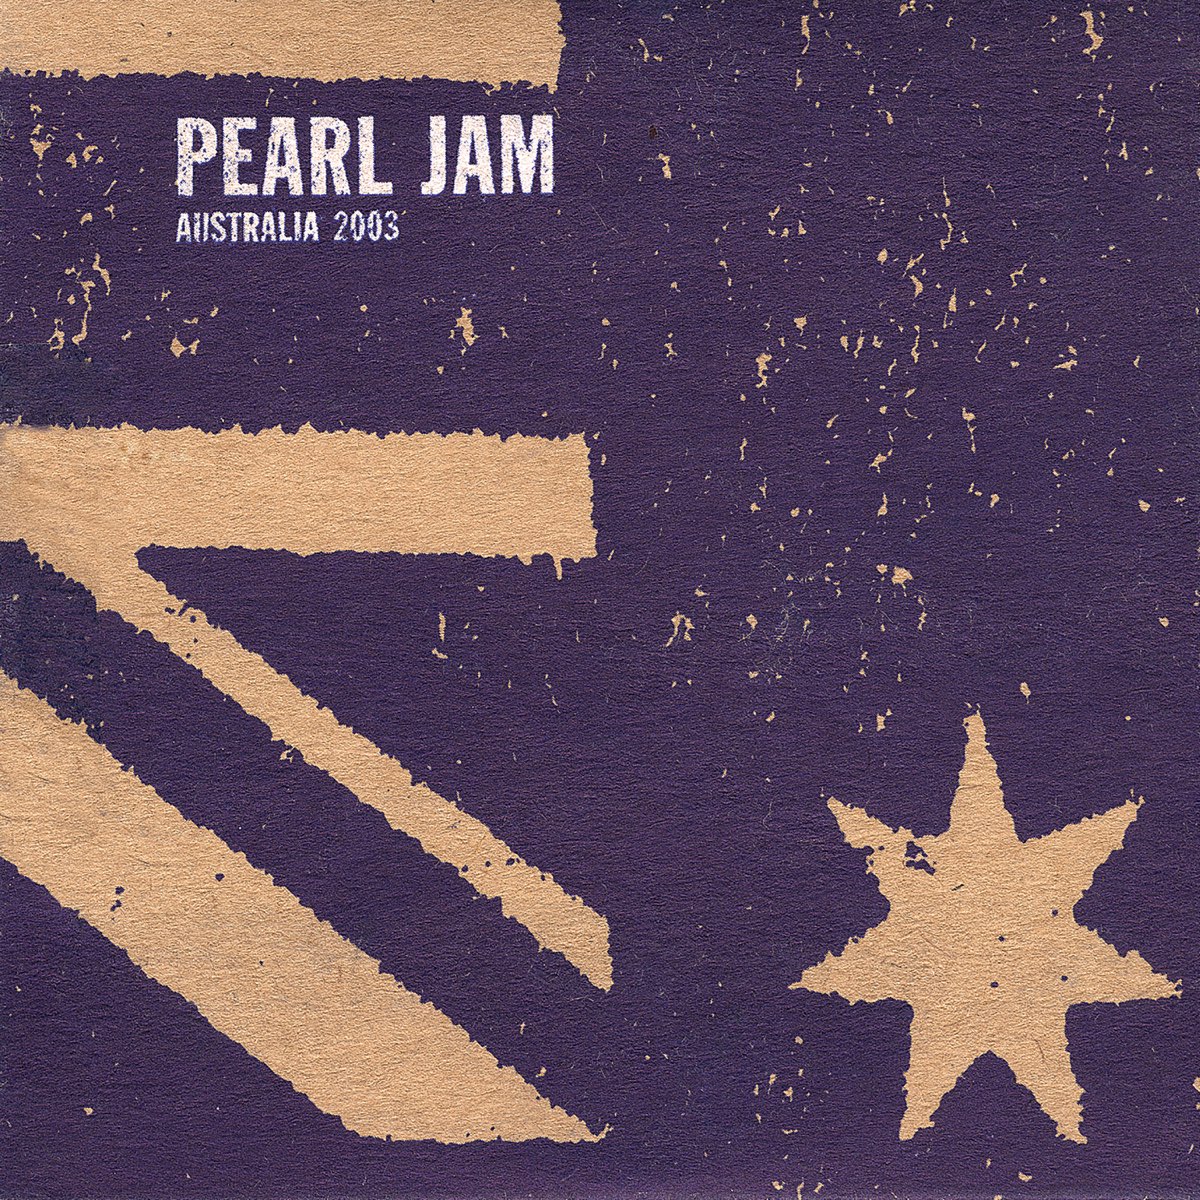 Pearl jam слушать. Pearl Jam альбомы. Pearl Jam обложка. Группа Pearl Jam альбомы. Pearl Jam обложки альбомов.